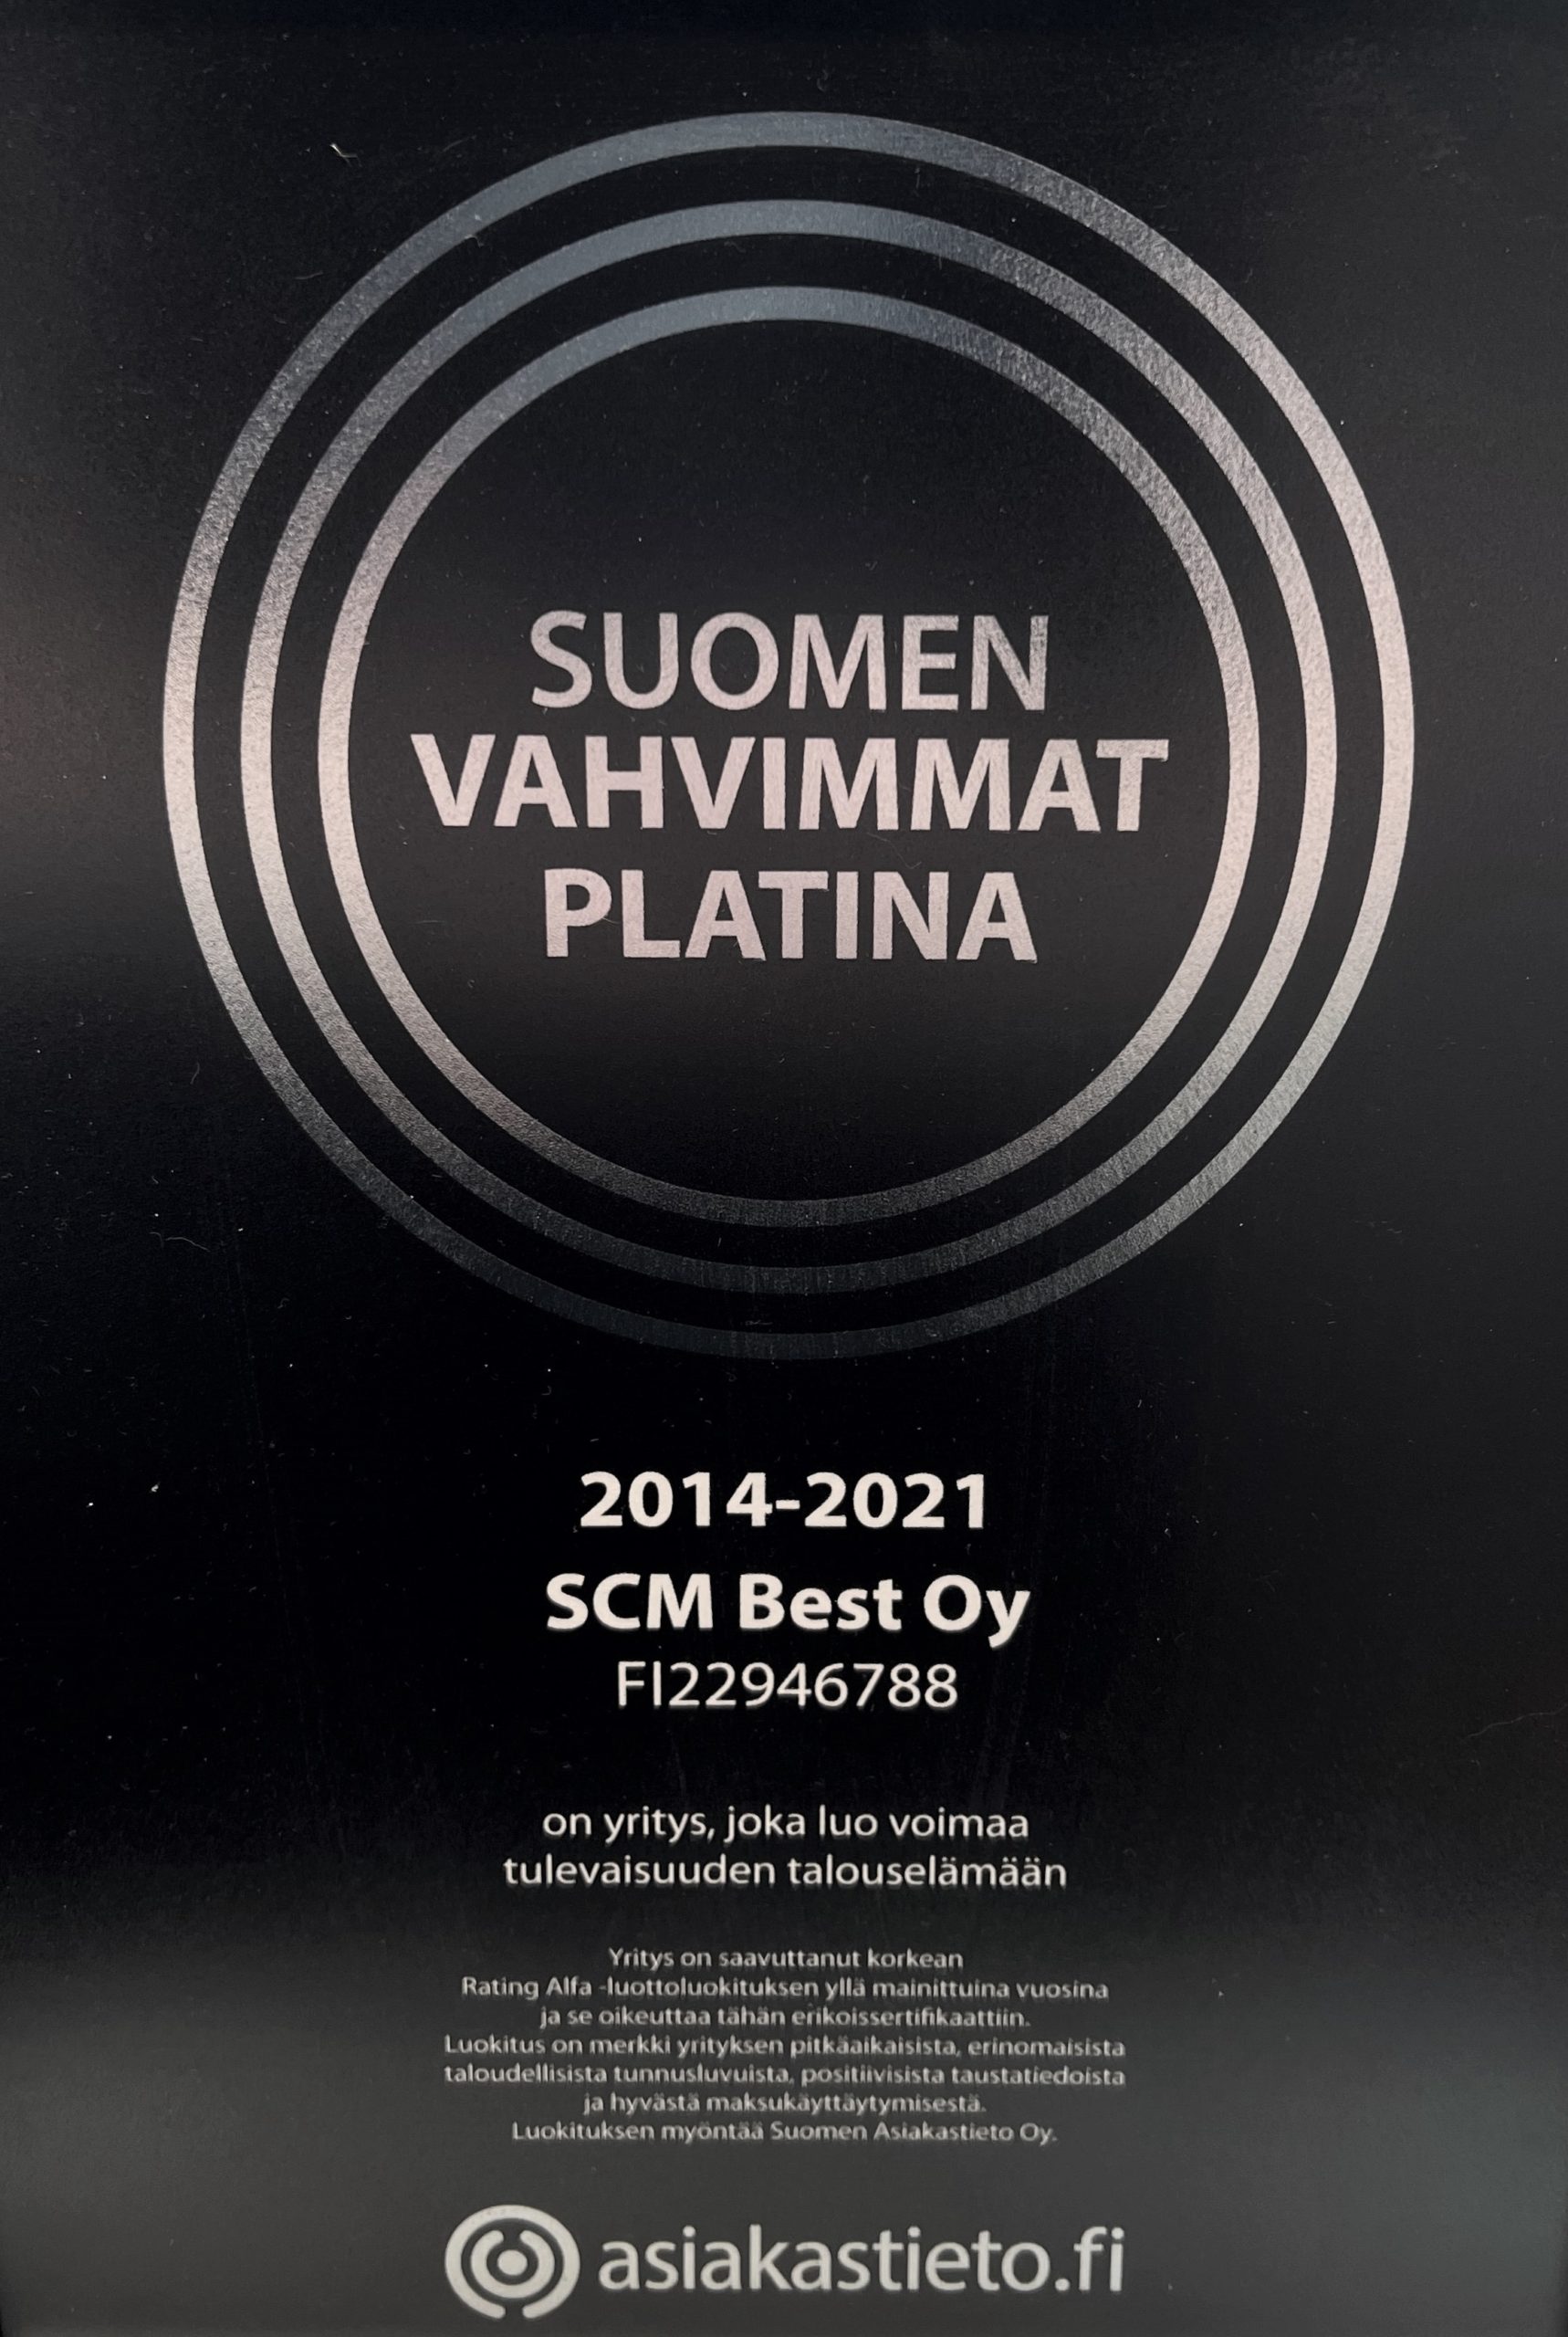 Suomen vahvimmat, platina, SCM Best Oy